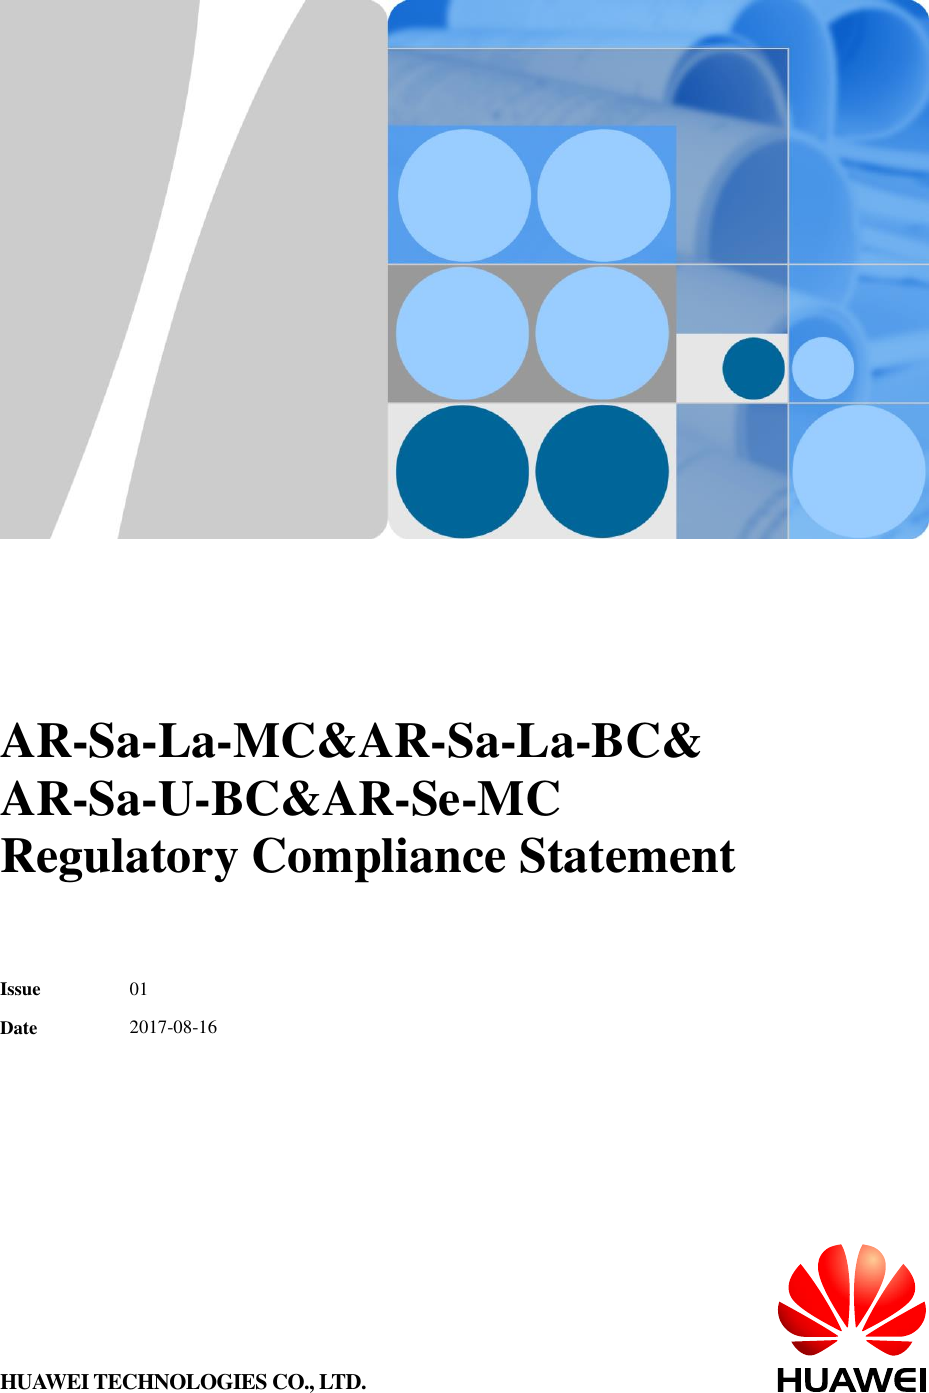           AR-Sa-La-MC&amp;AR-Sa-La-BC&amp; AR-Sa-U-BC&amp;AR-Se-MC Regulatory Compliance Statement   Issue 01 Date 2017-08-16 HUAWEI TECHNOLOGIES CO., LTD. 